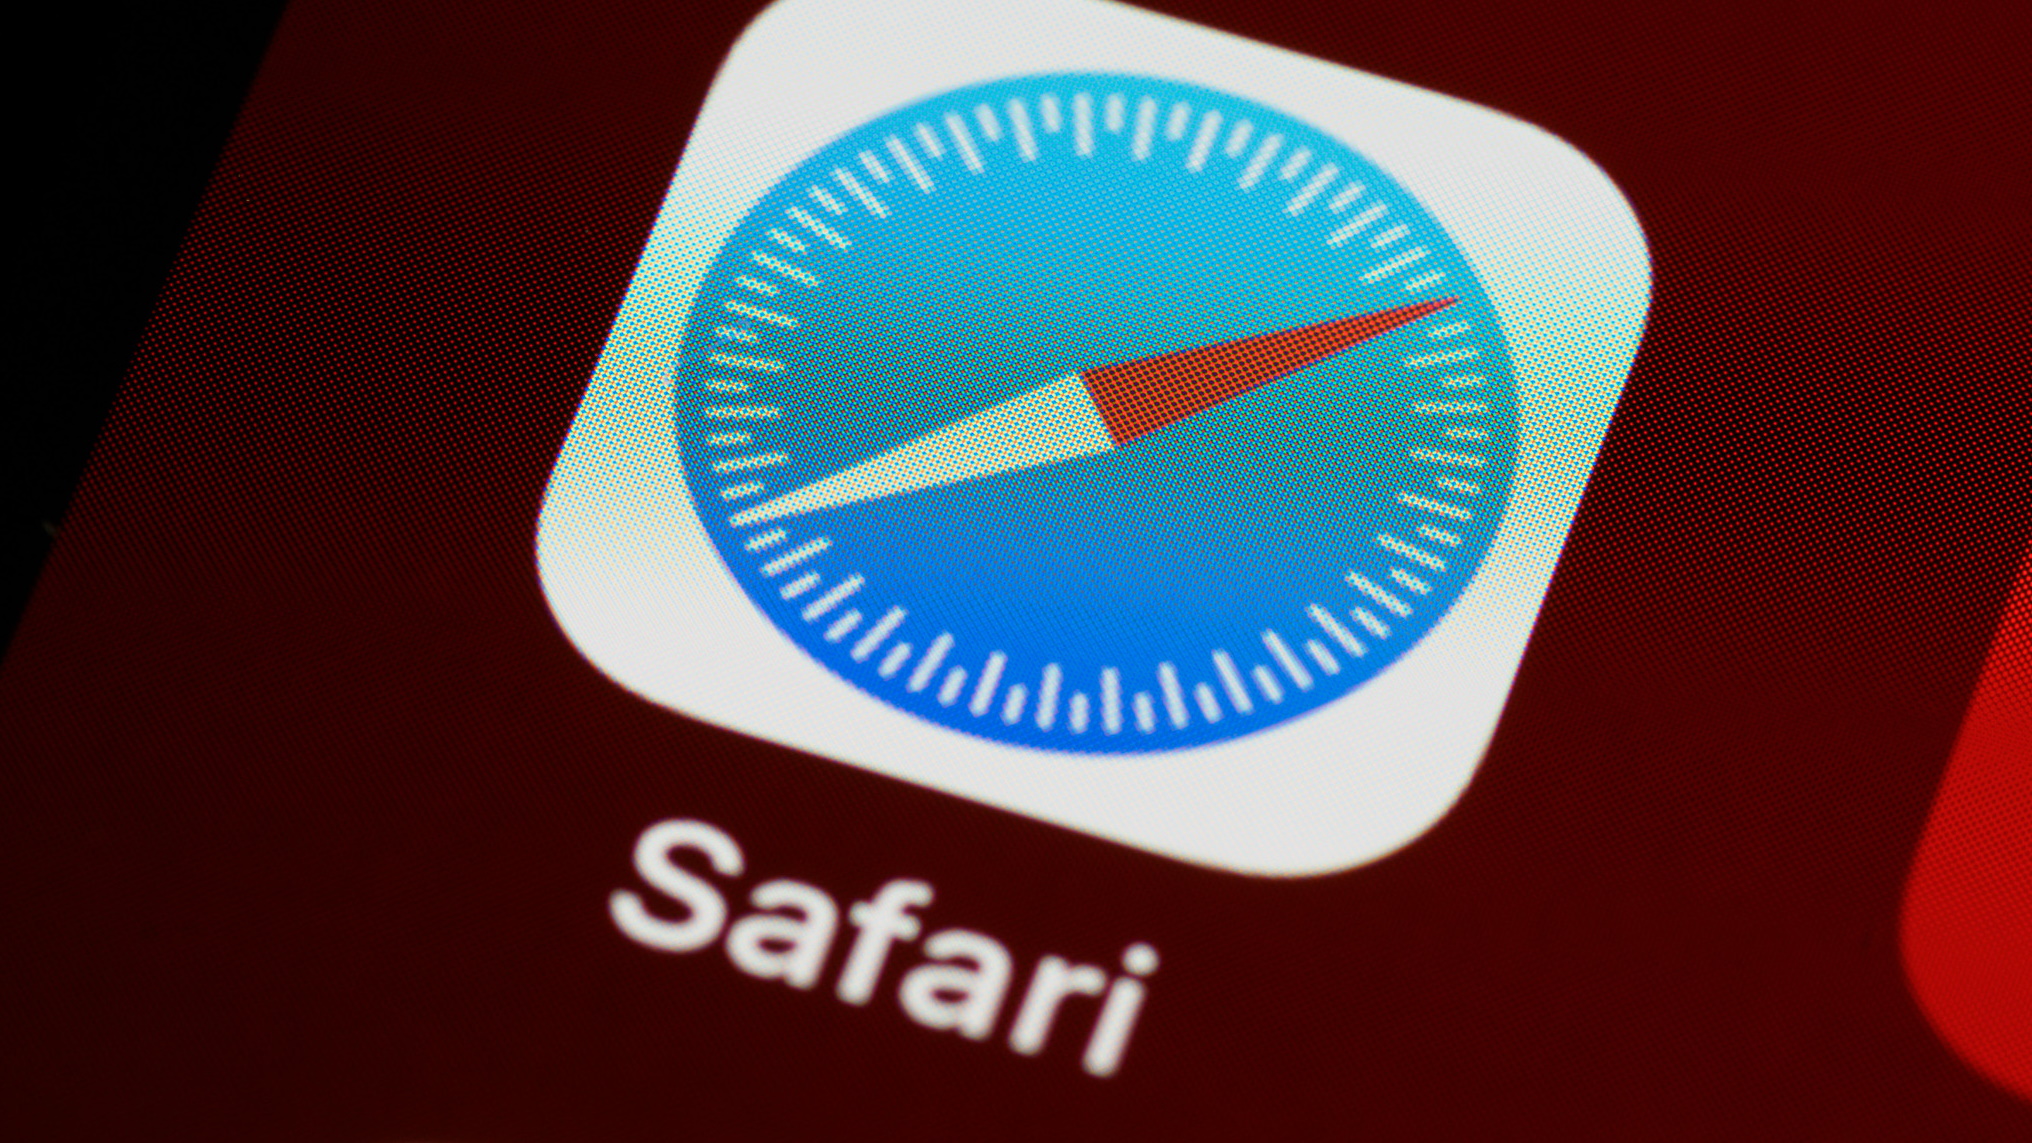 Safari - Apple